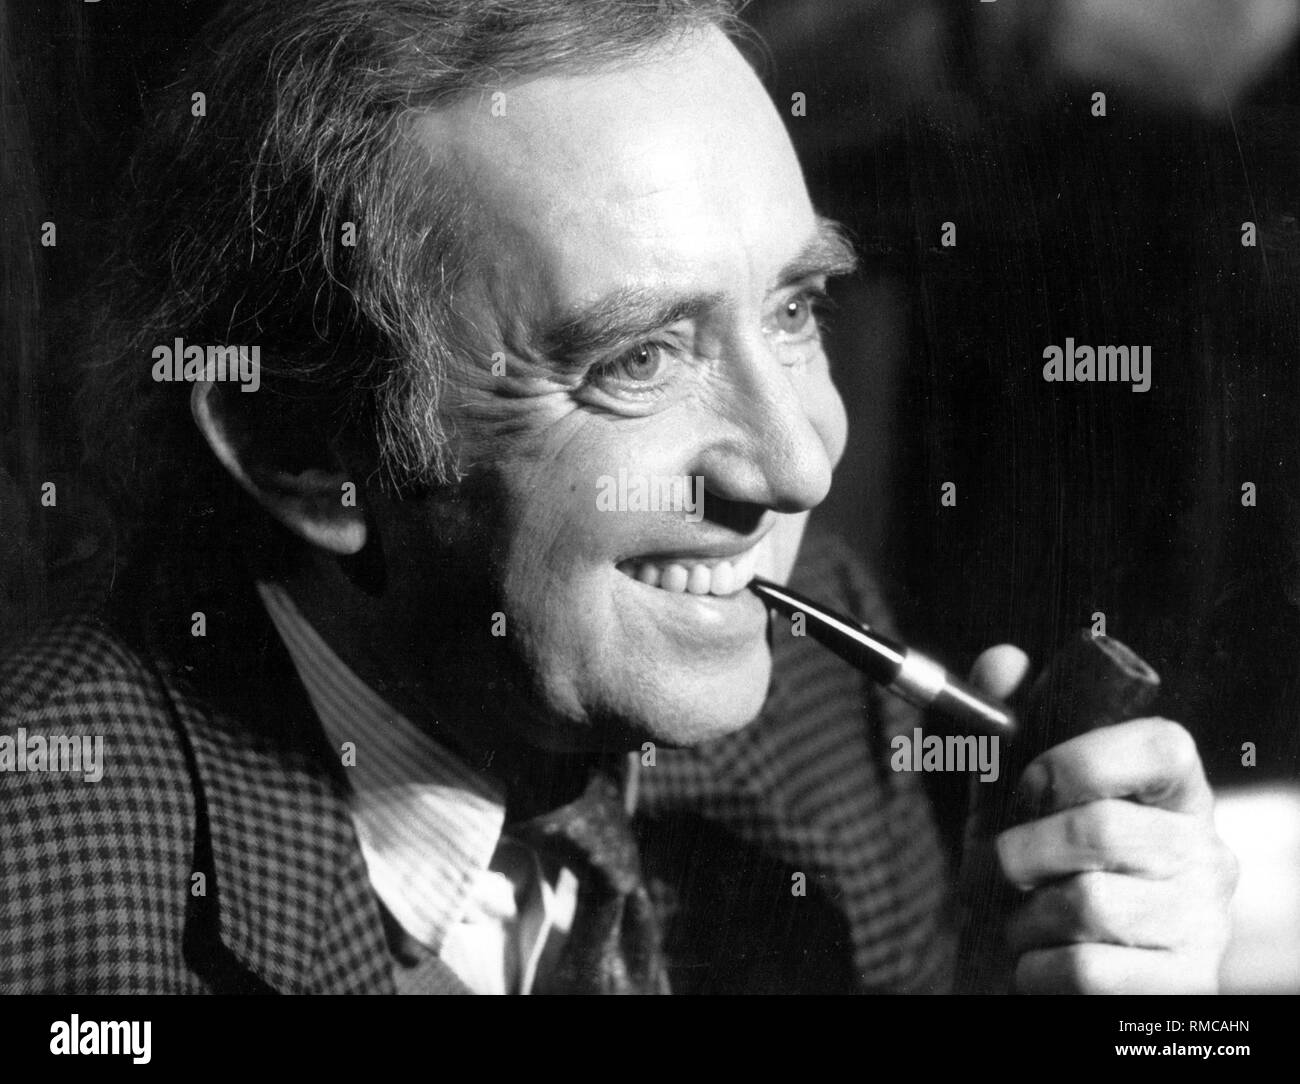 Hans Clarin (born 1929), a German actor. Stock Photo